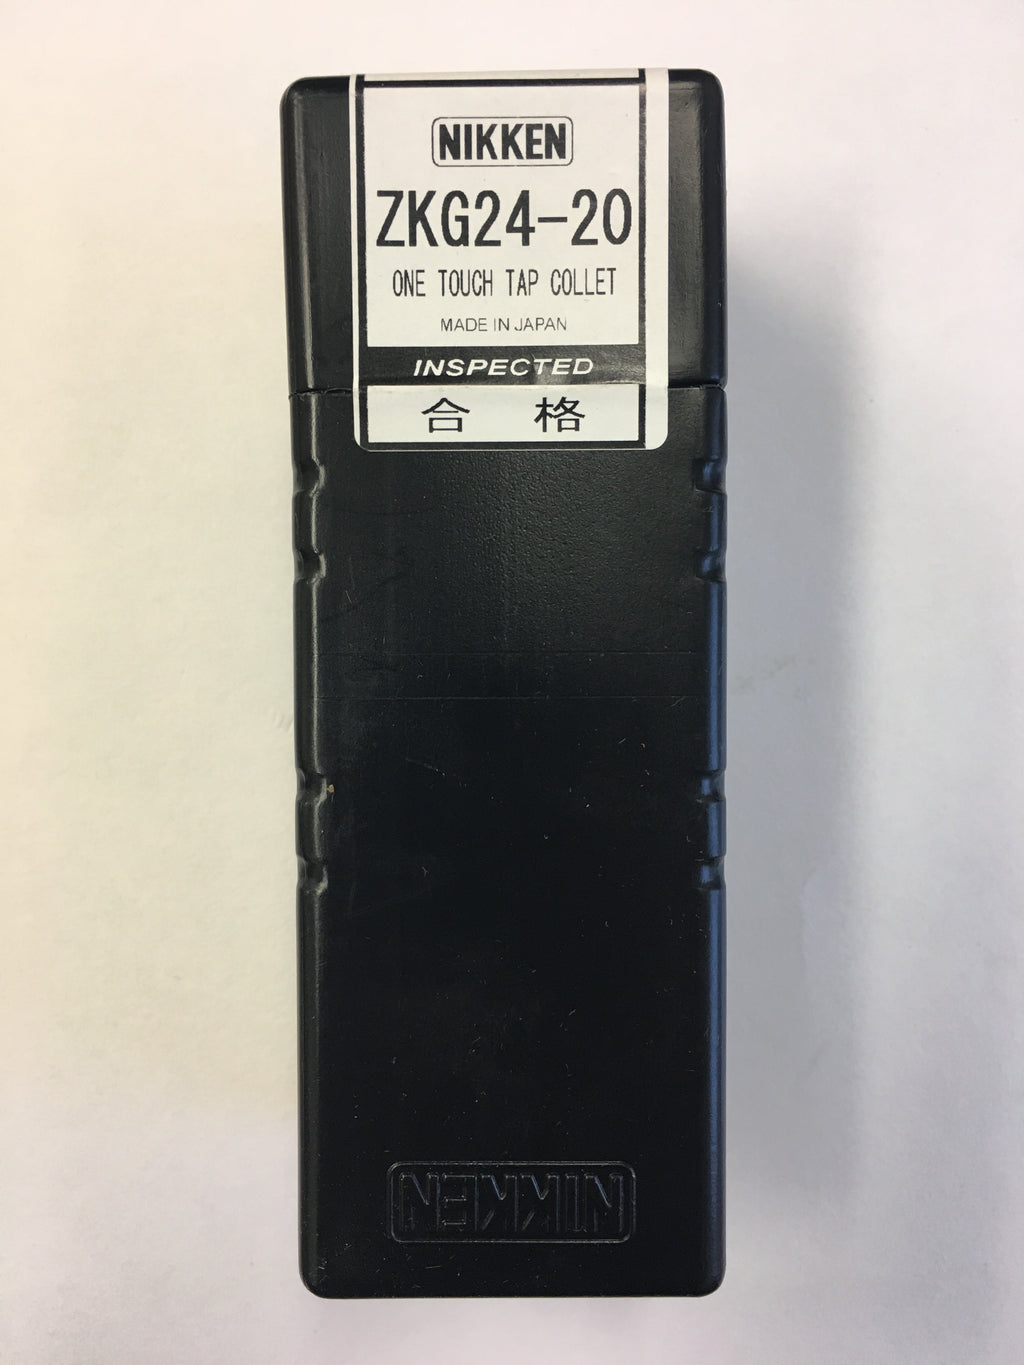 ZKG24-20